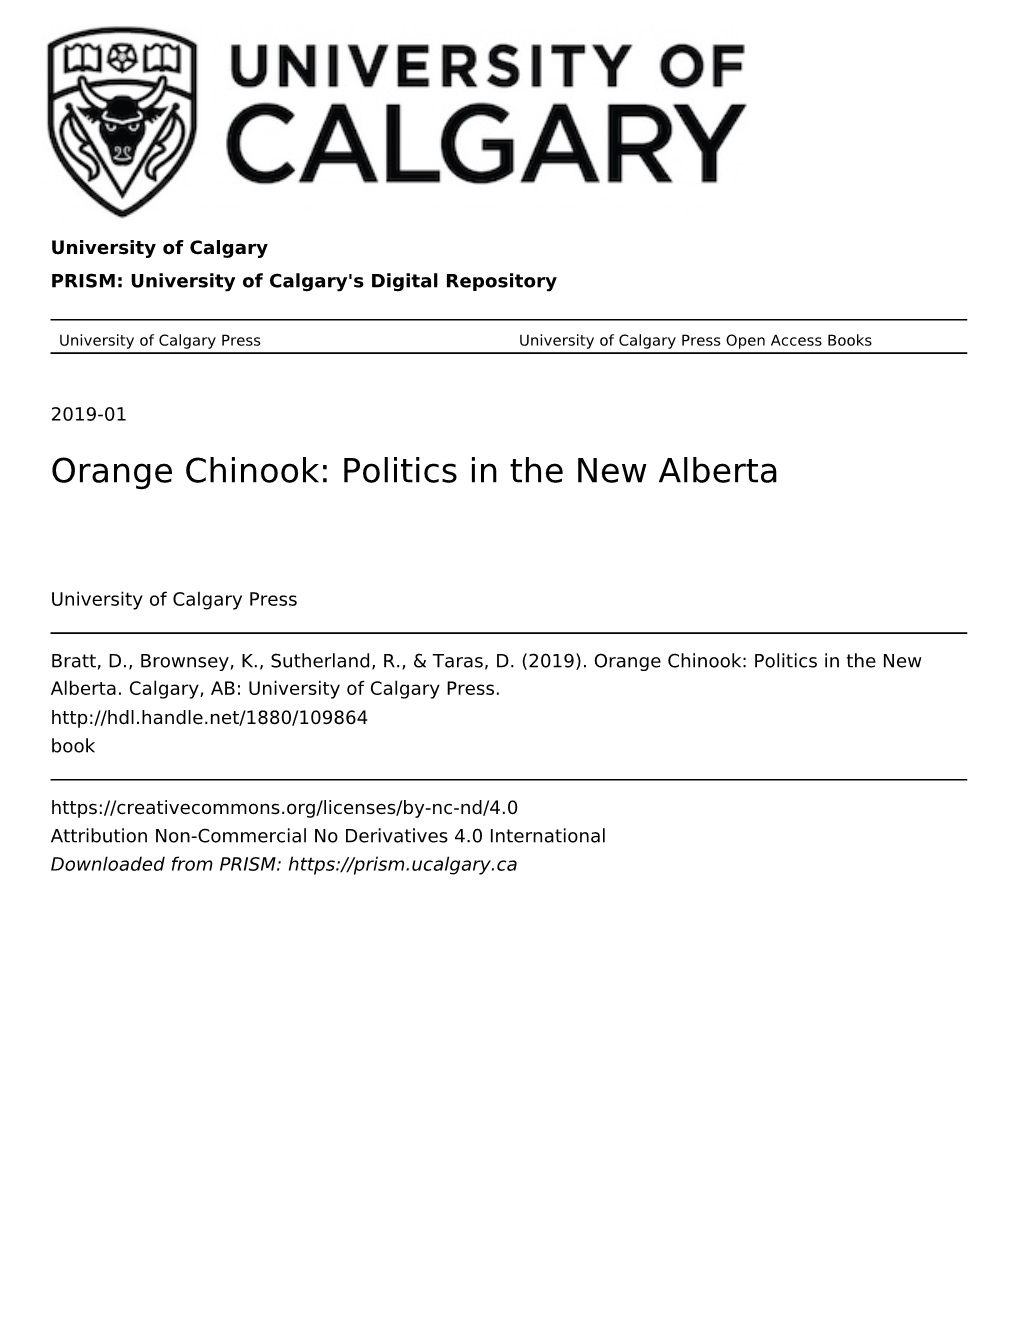 Chapter 5. Alberta Politics Online